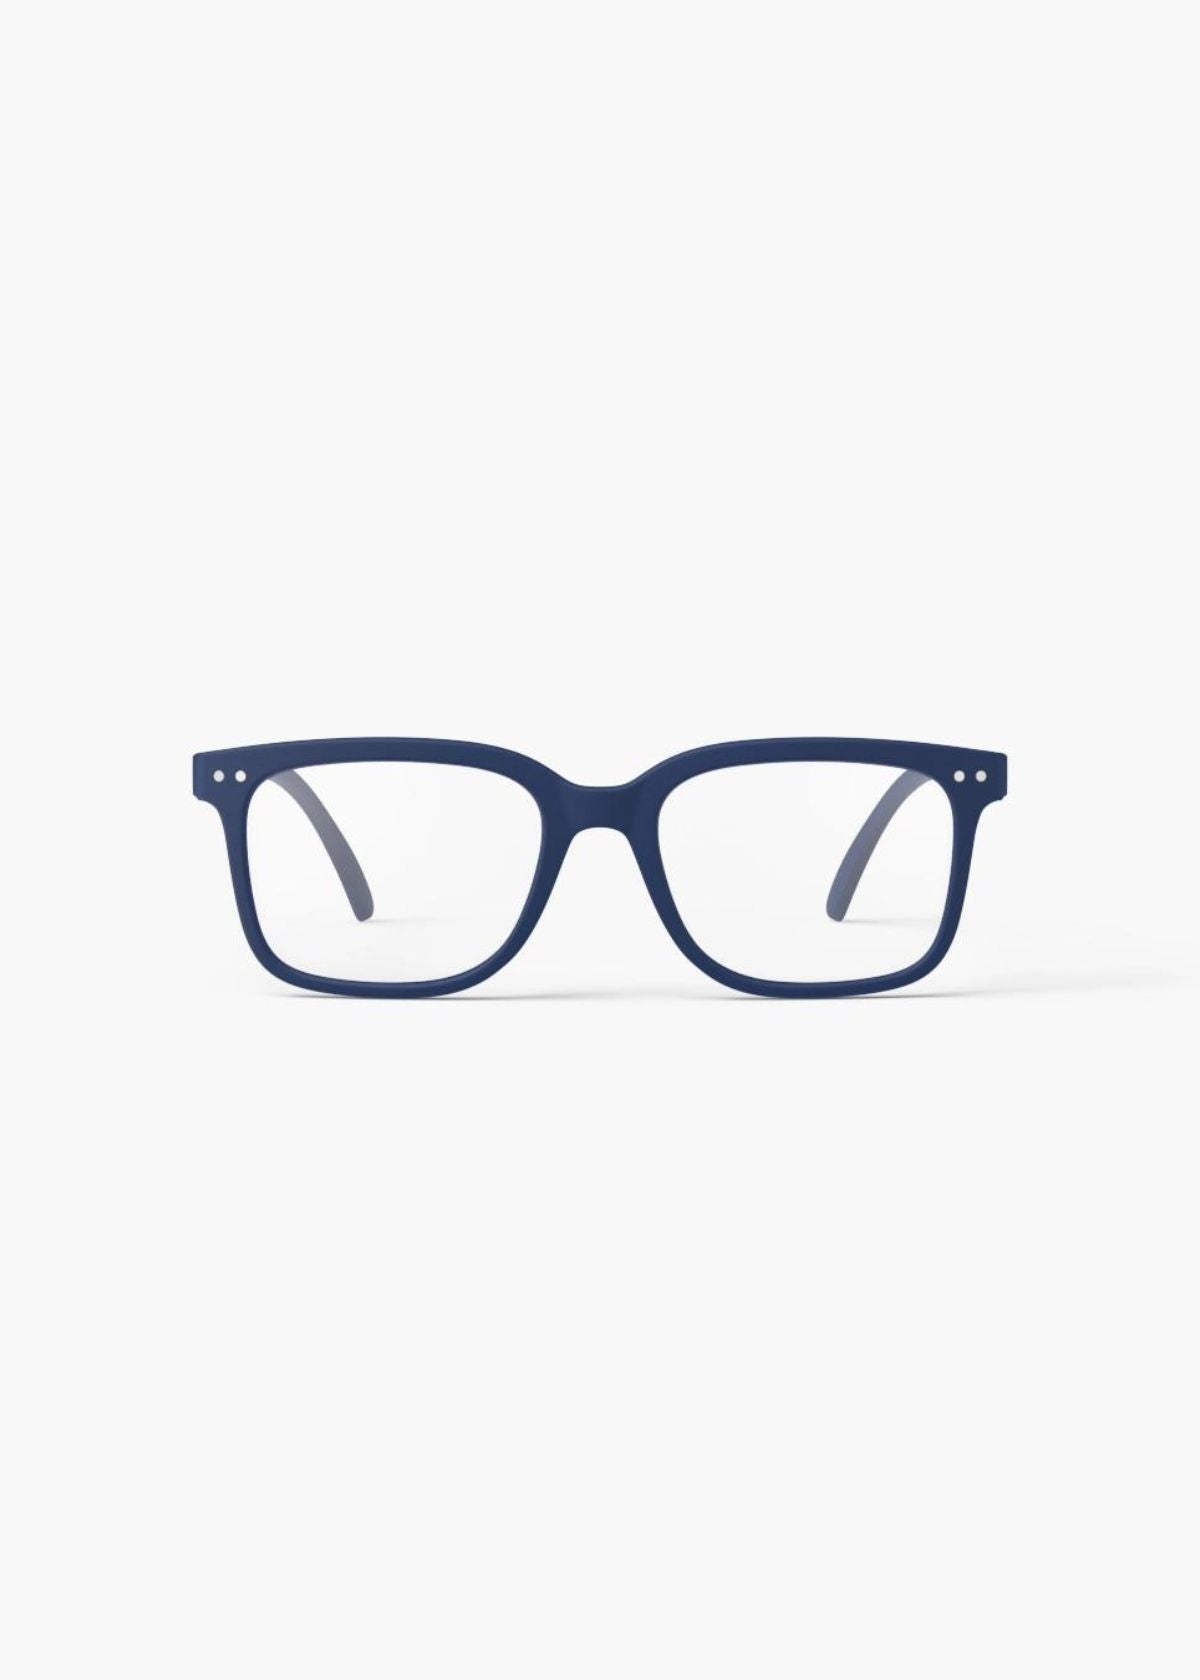 IZIPIZI Rectangular Reading Glasses #L in Navy Blue